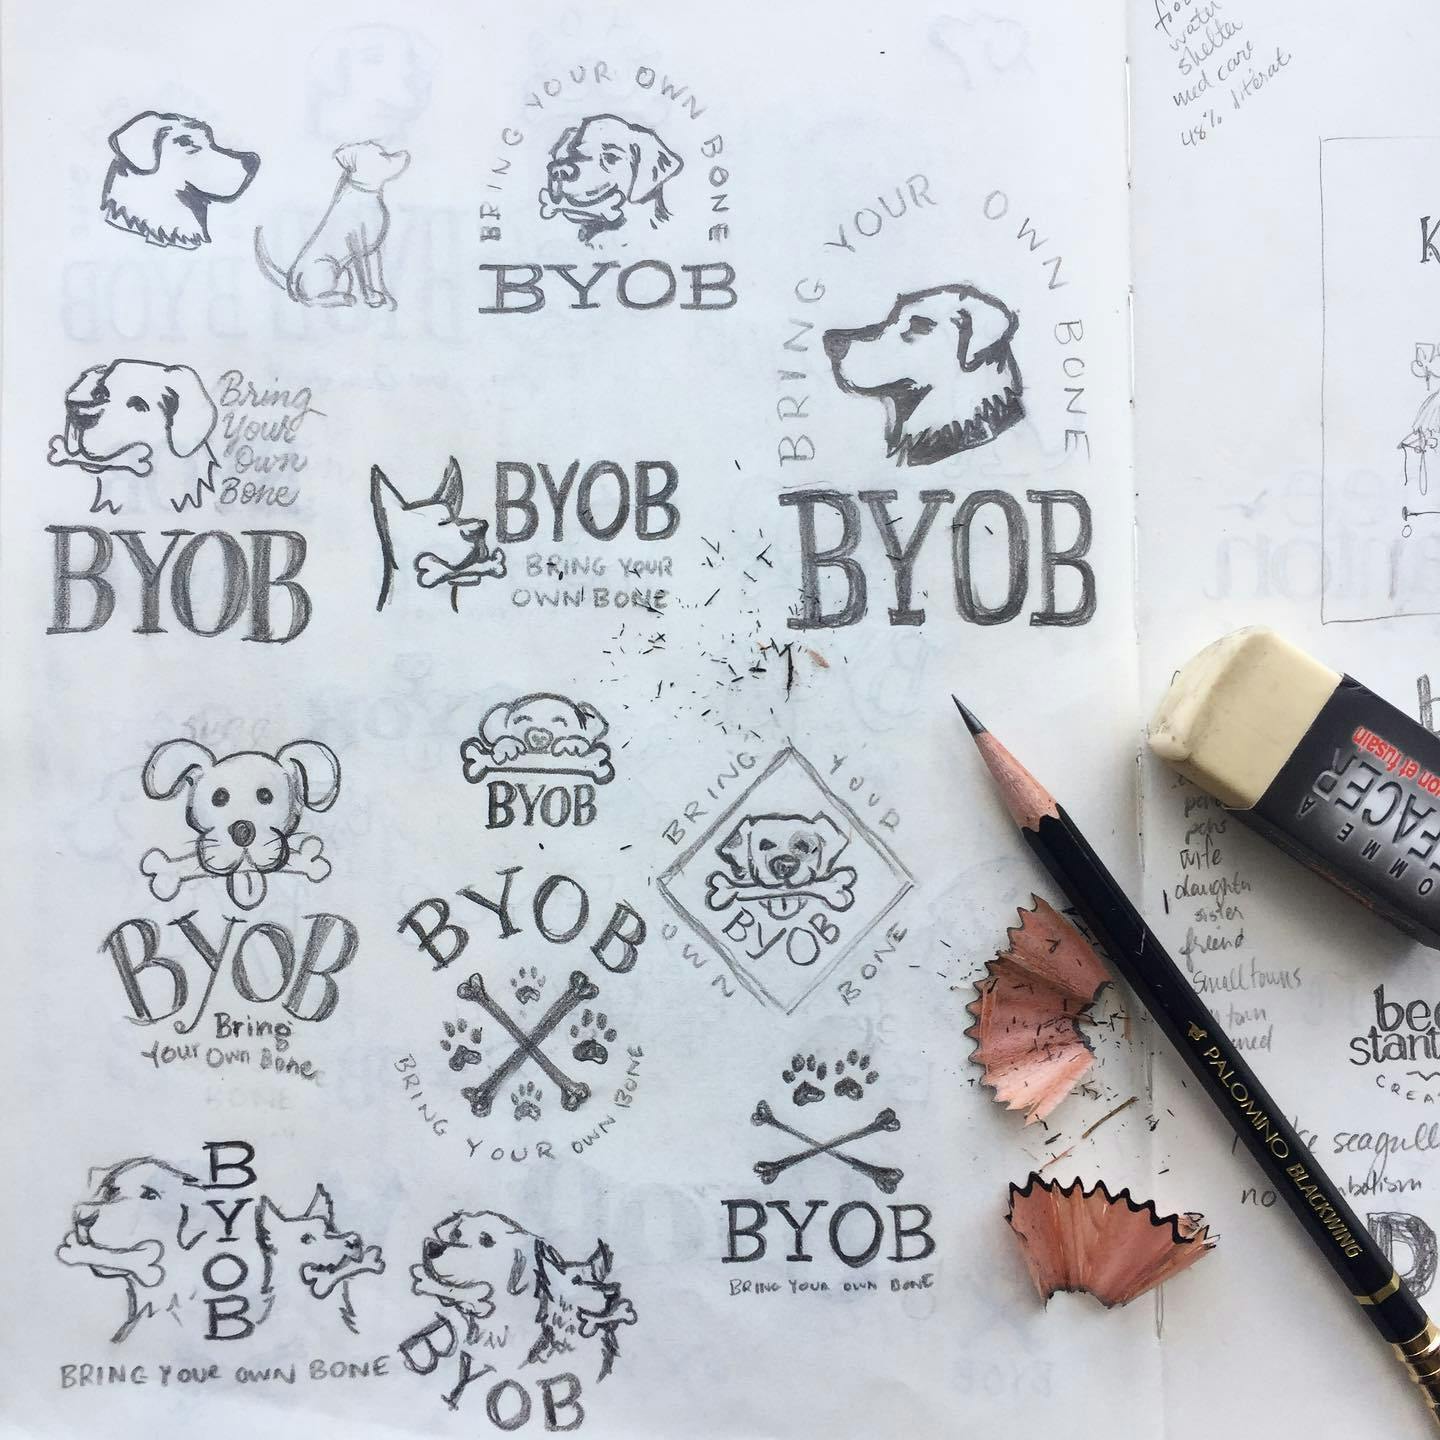 Sketches of the BYOB logo